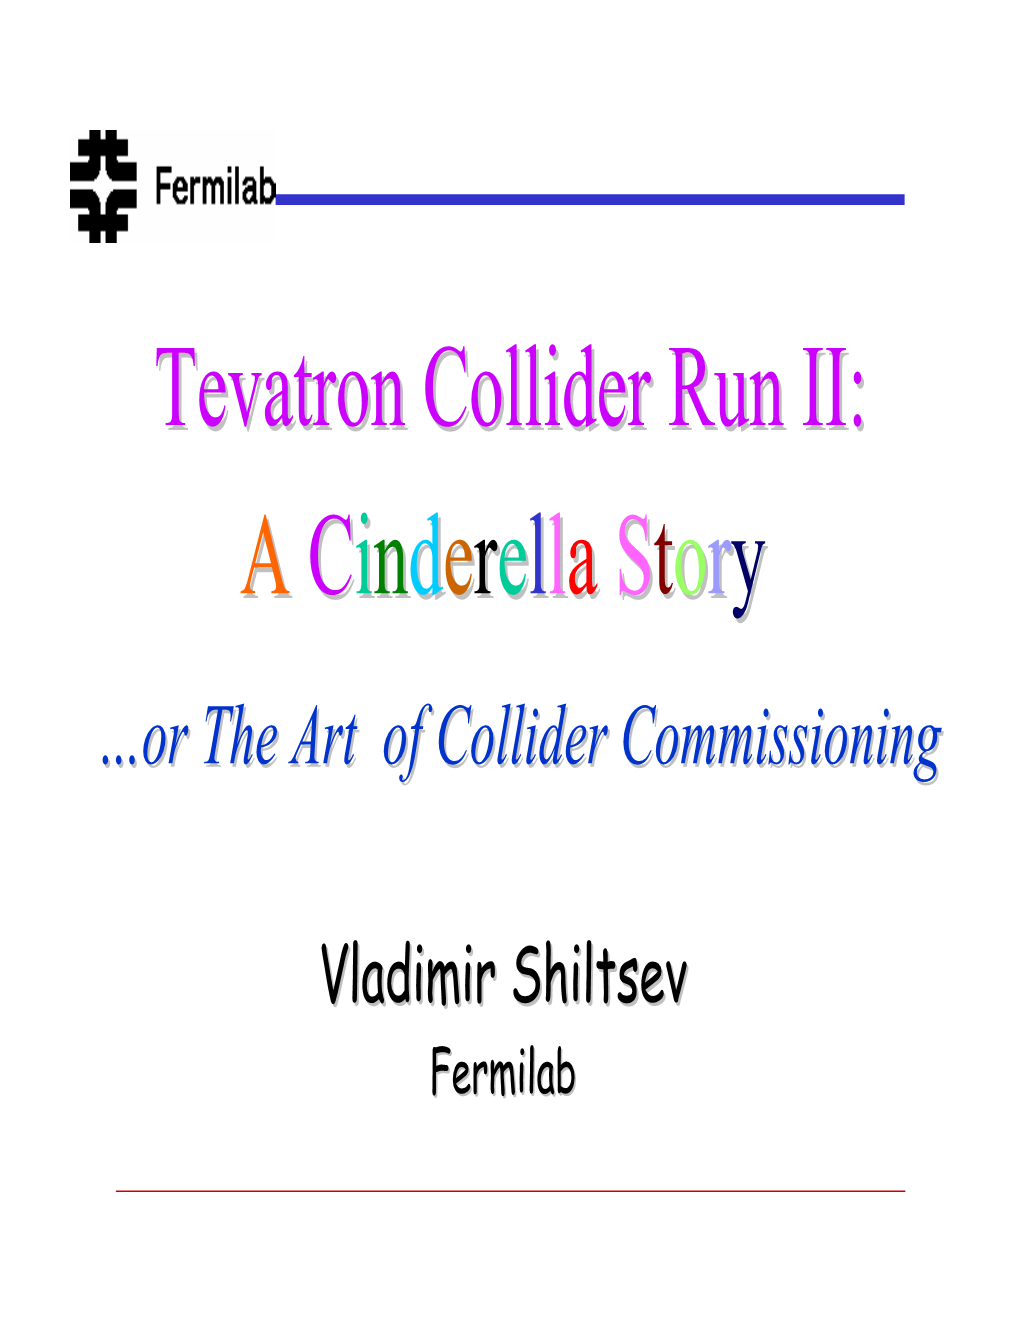 Tevatron Collider Run II: a Cinderella Story